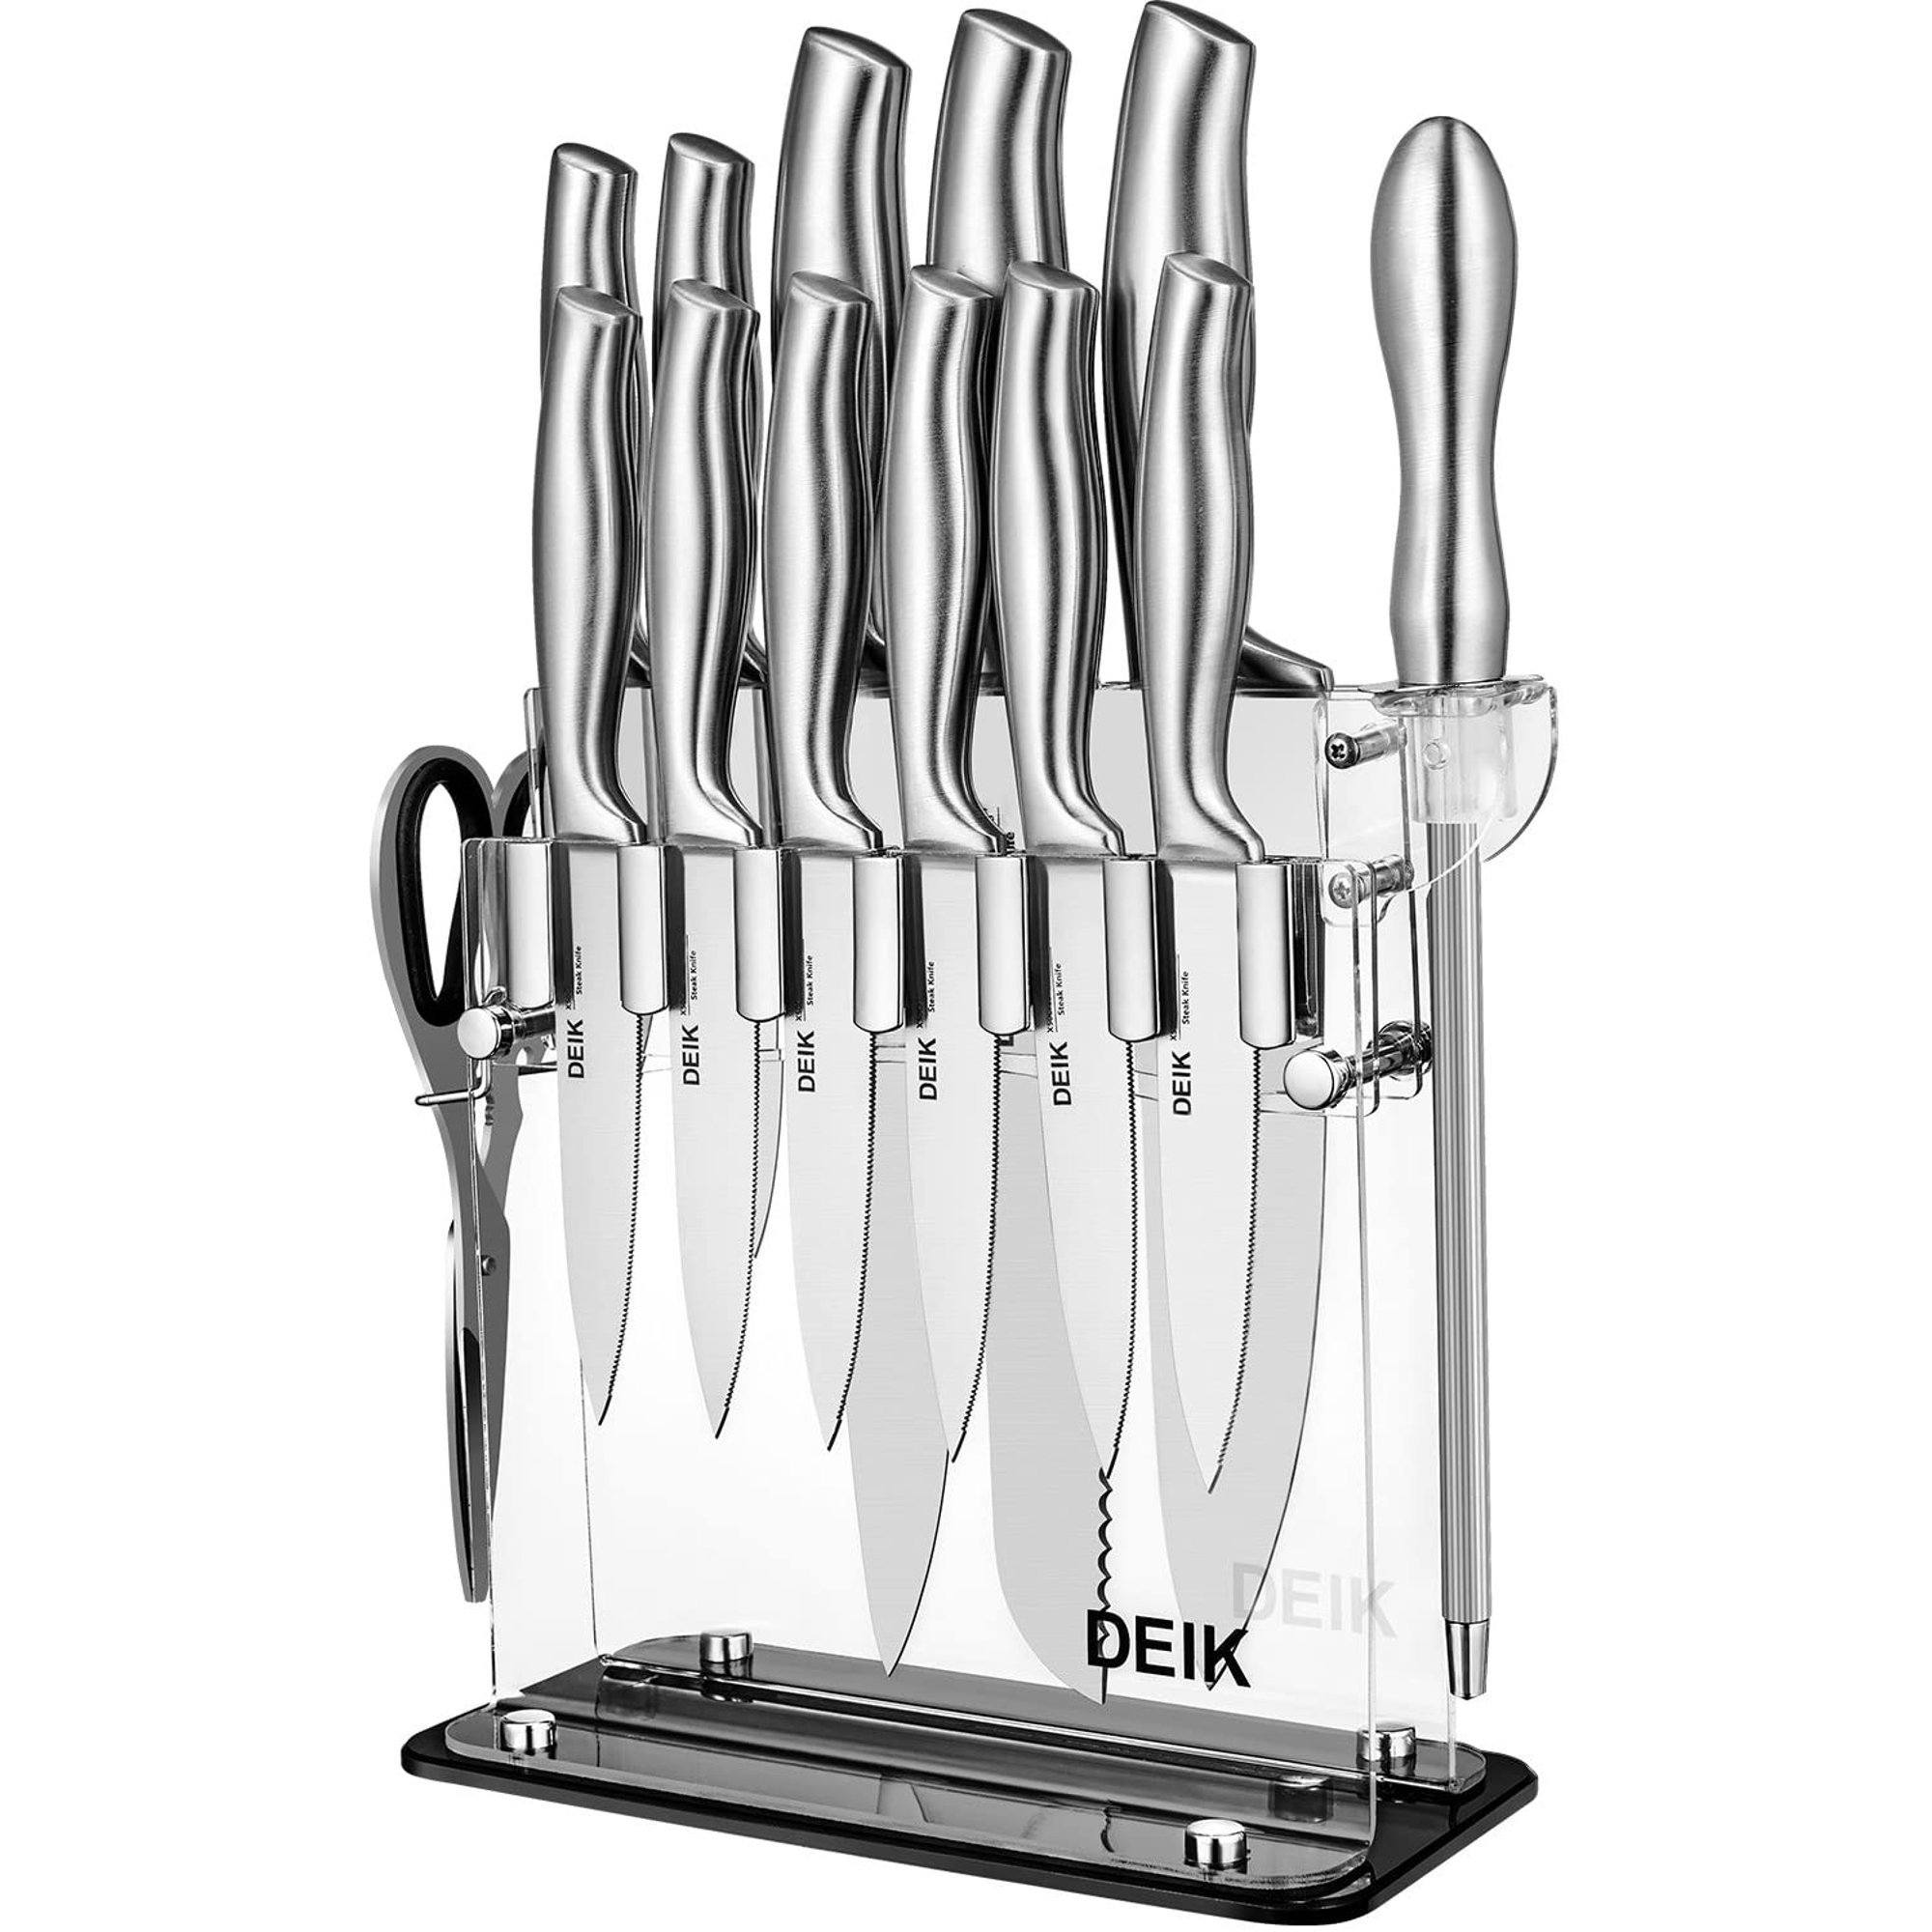 Deik Knife Set Stainless Steel Set Of 5 Knives